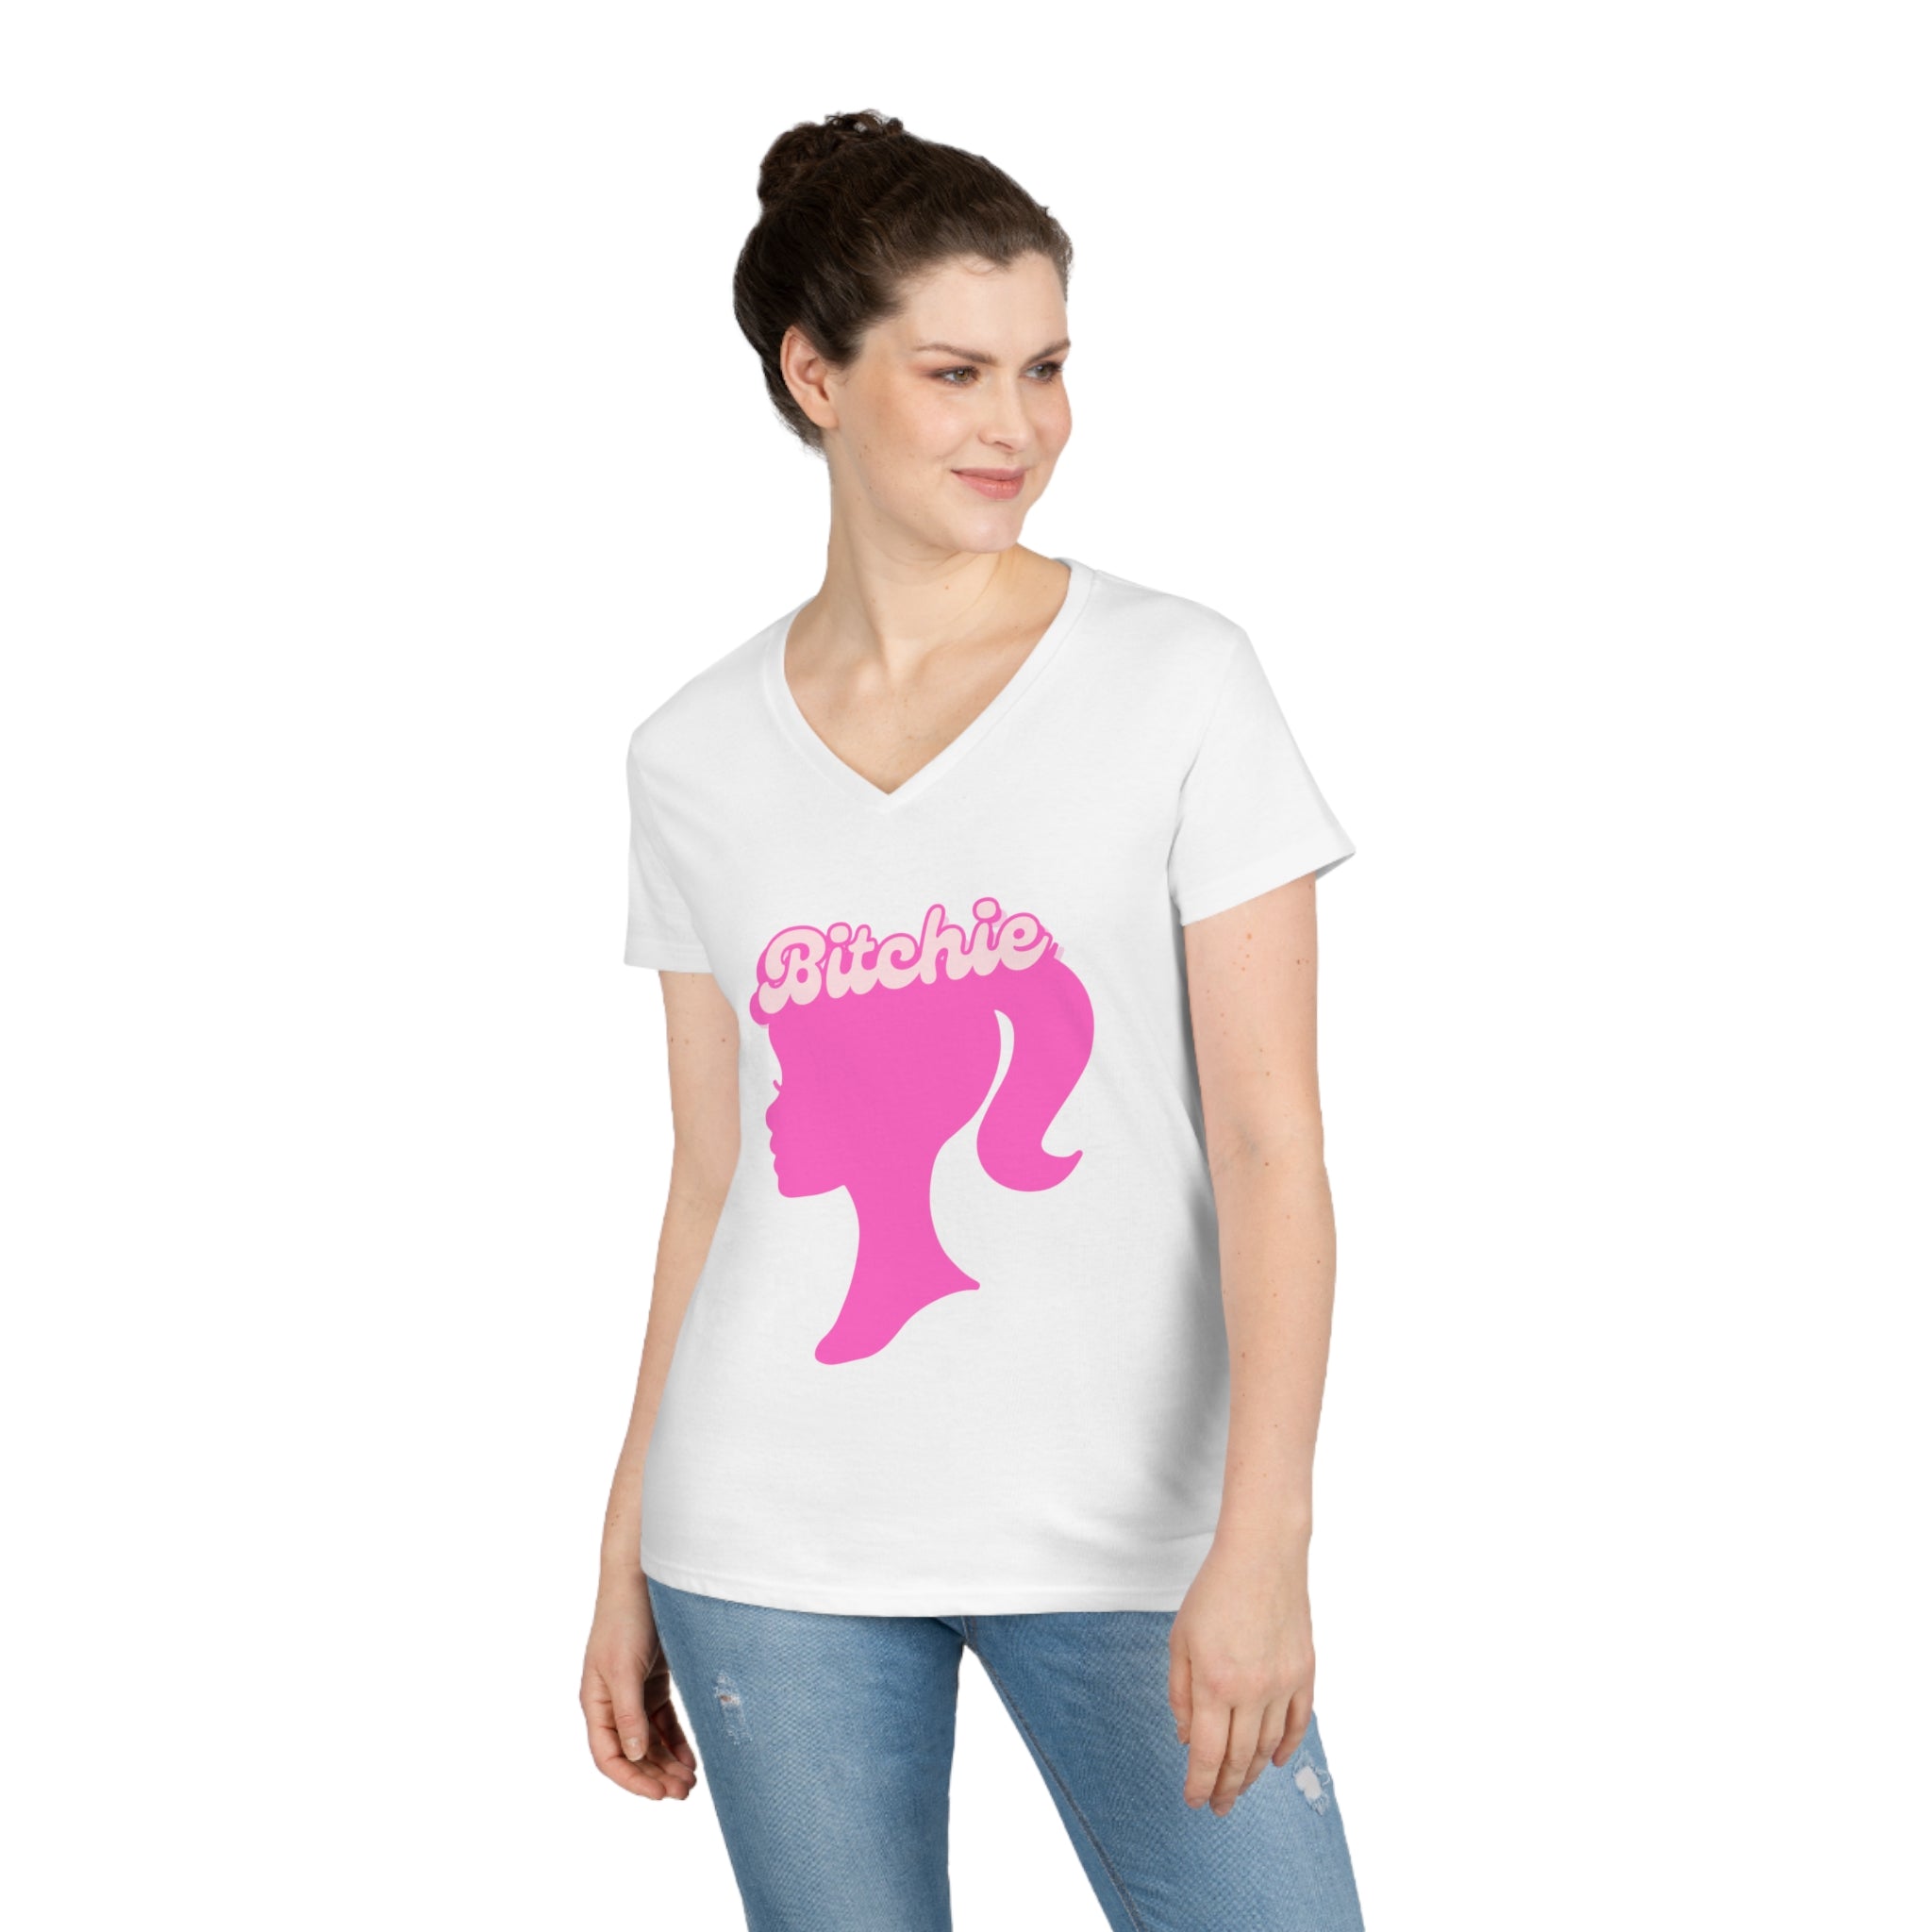  Bitchie (Barbie Image) Funny Women's V Neck T-shirt, Cute Graphic Tee V-neck